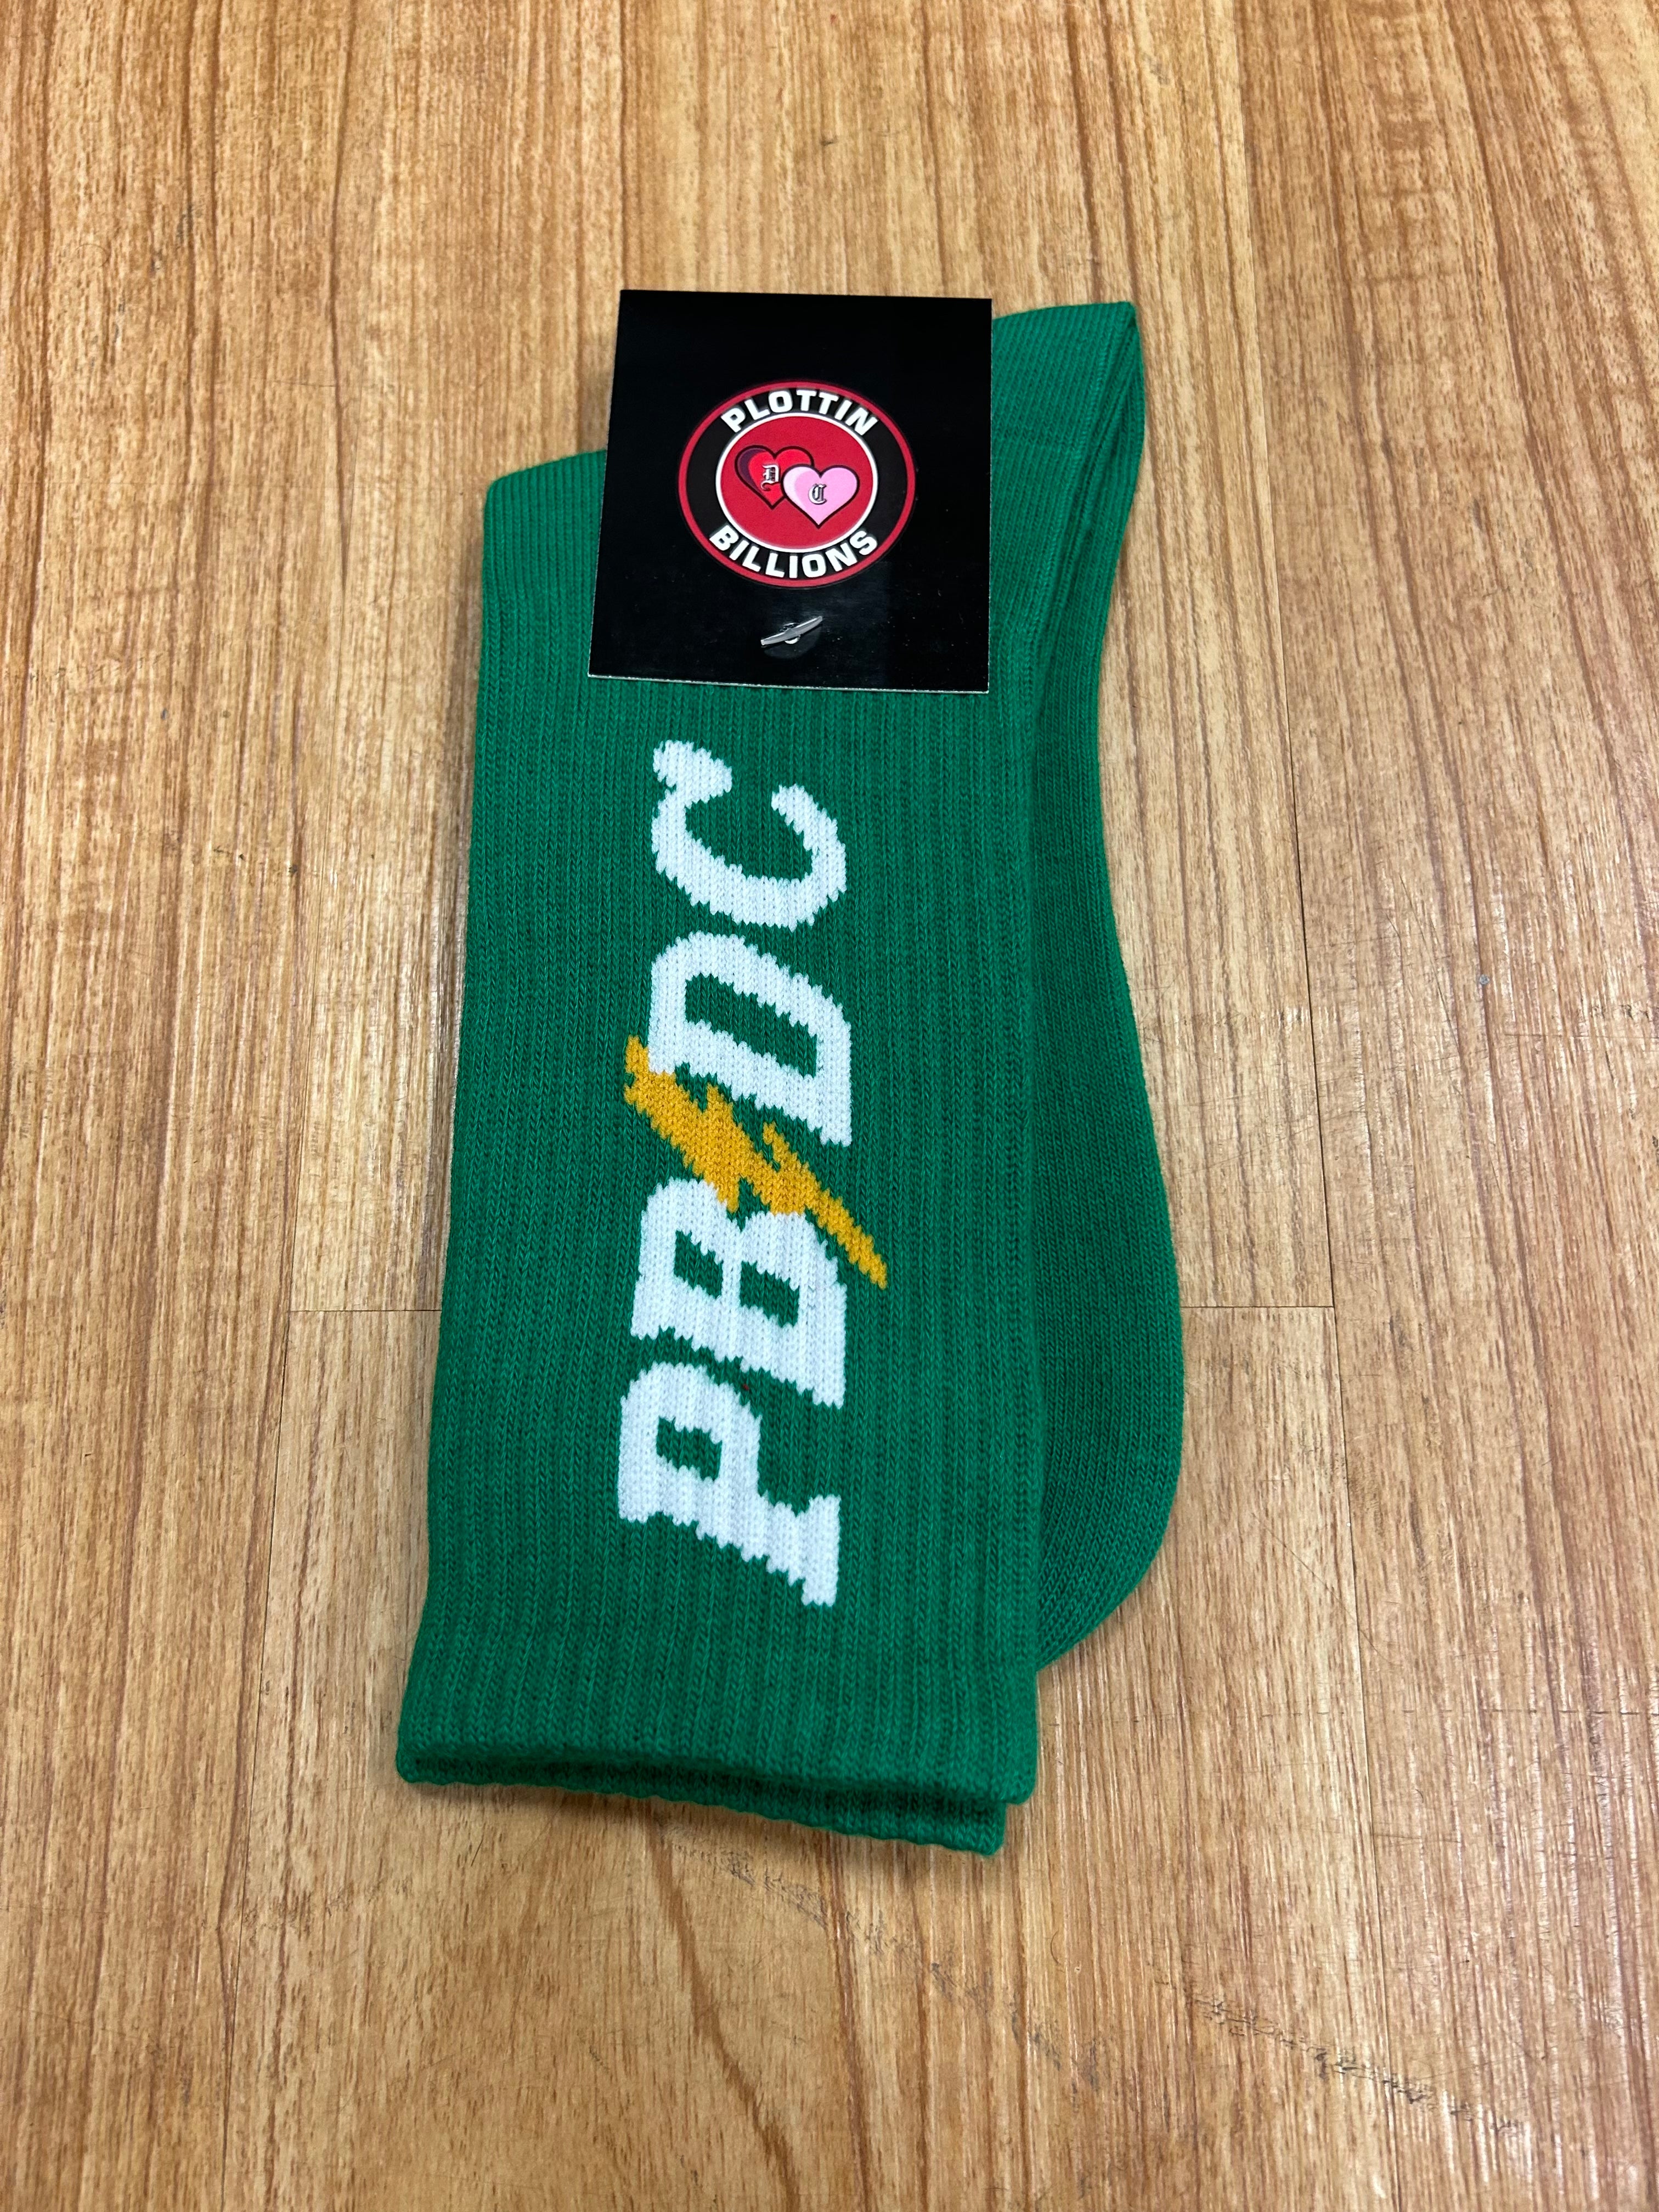 PBDC Socks (Green/White)